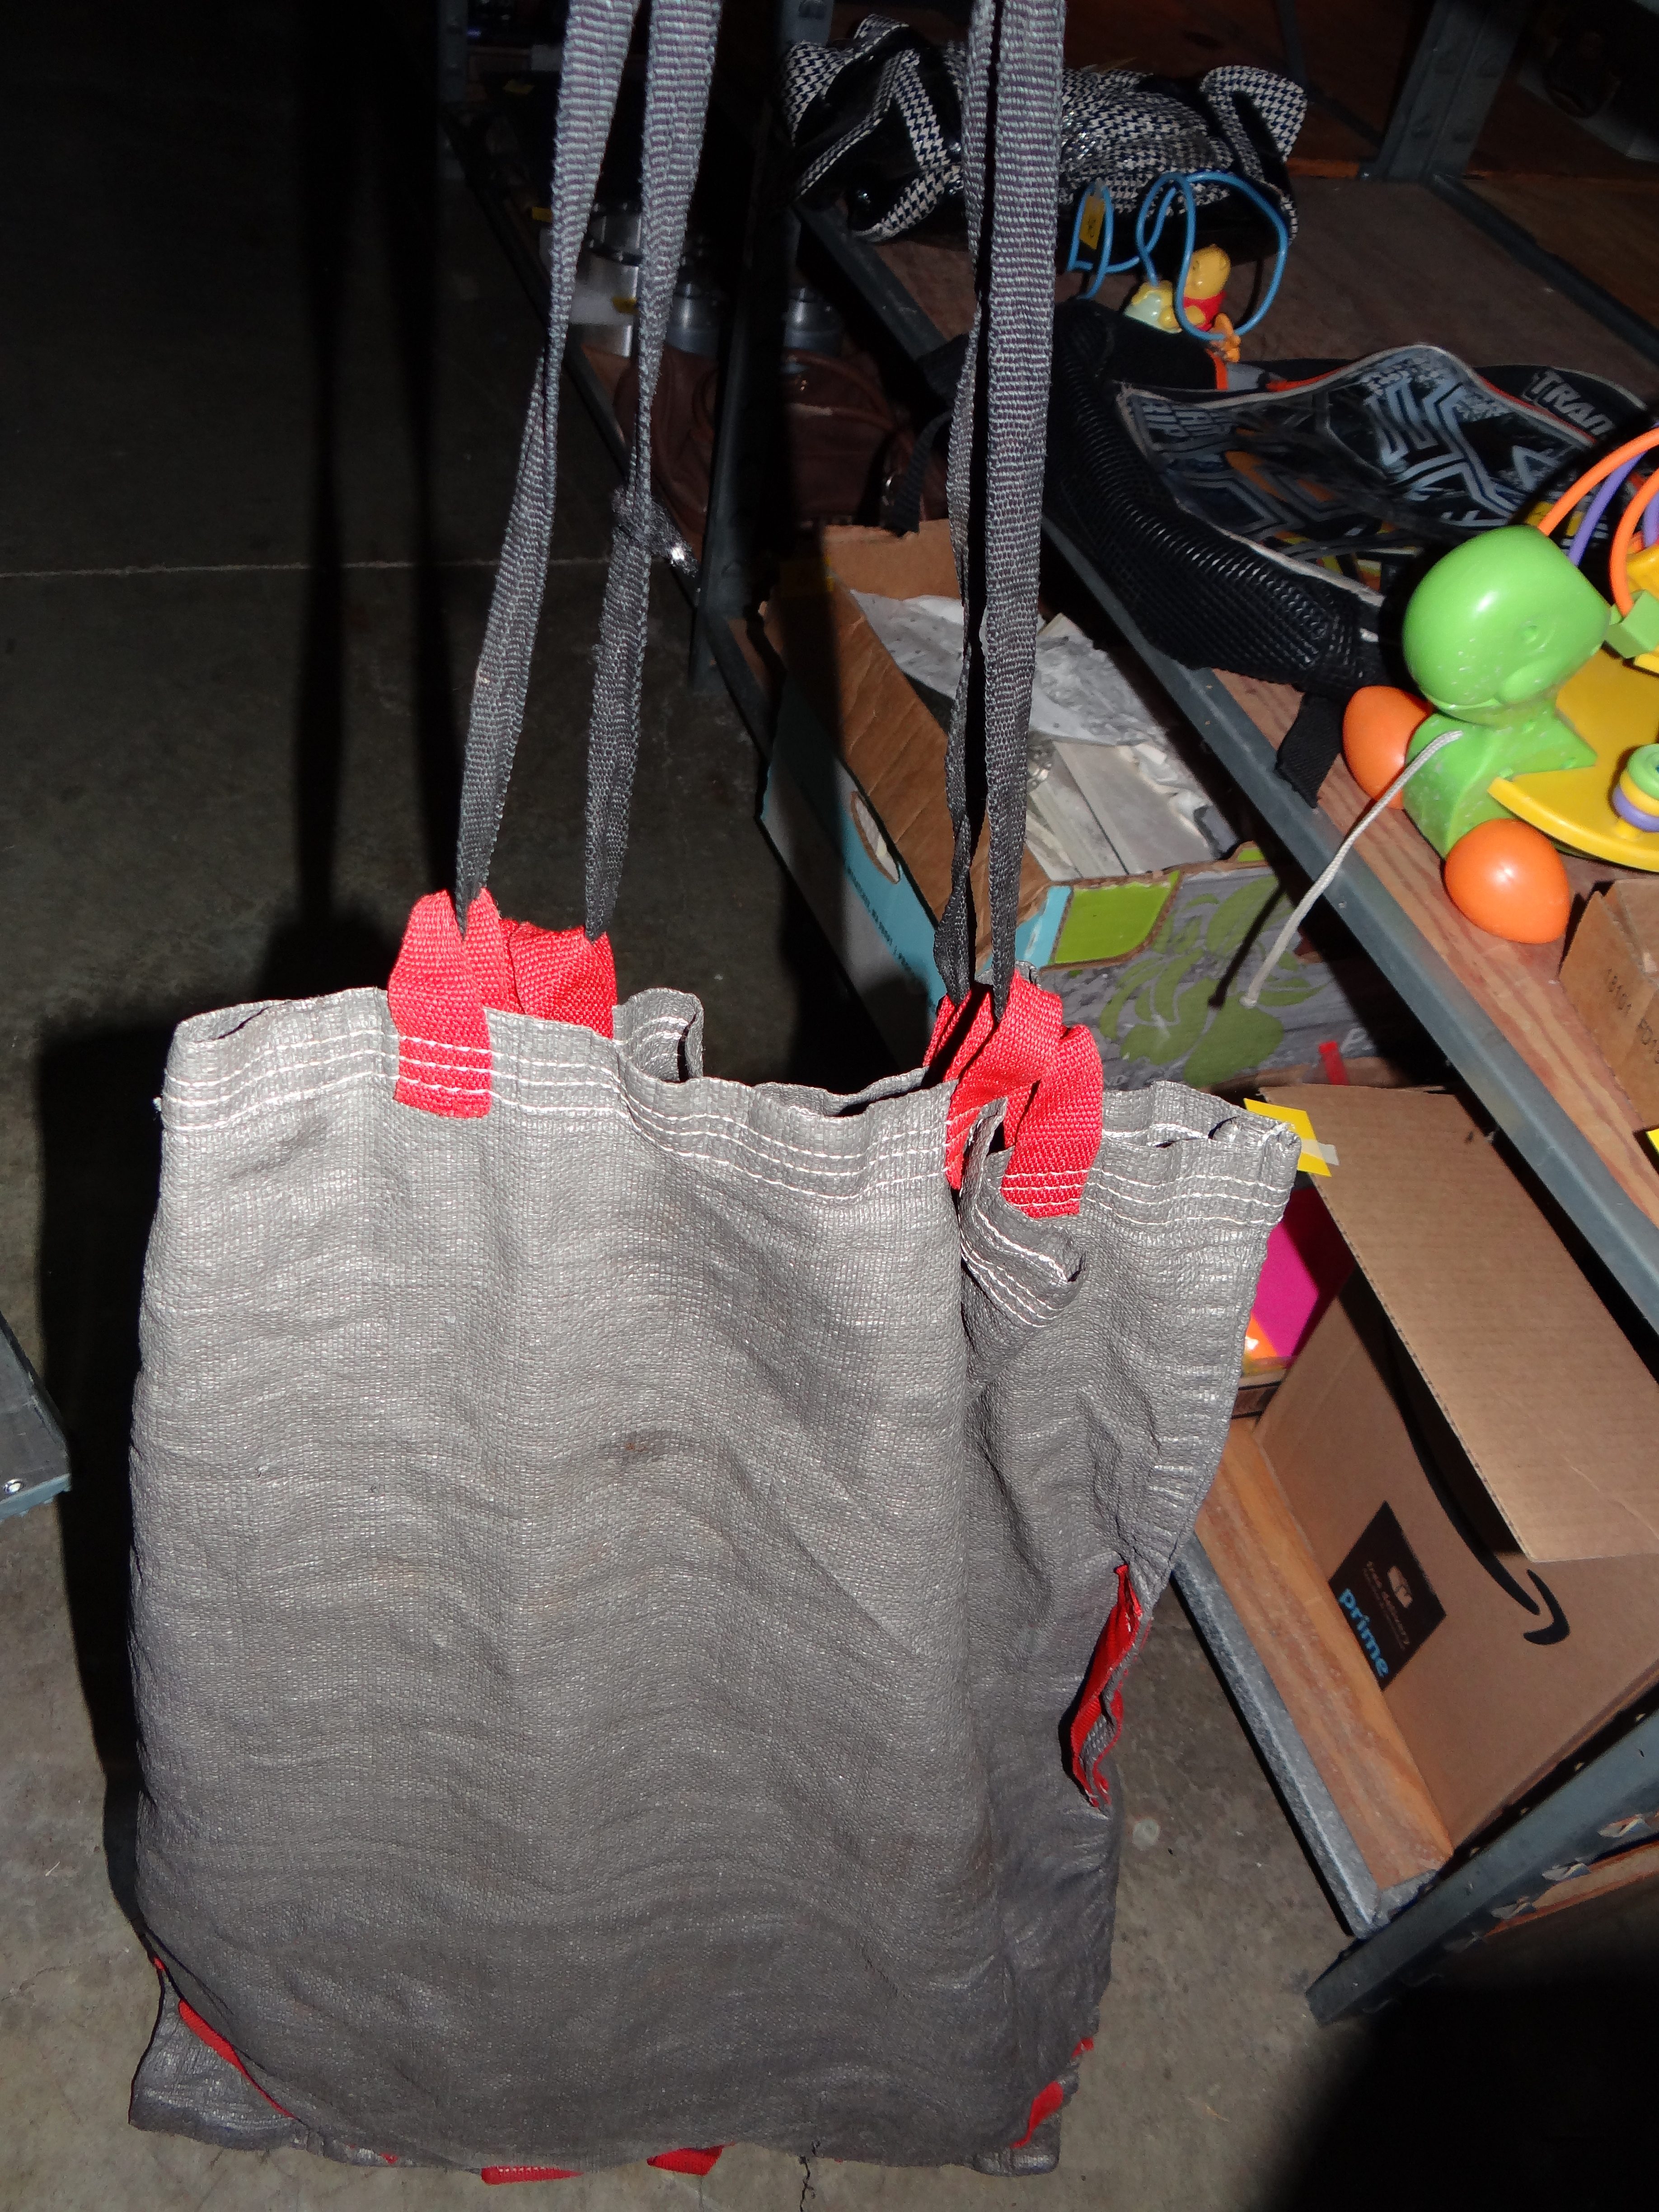 44-Heavy Duty Plastic Drawstring Bag w/ Bungee Cords & Tie Downs